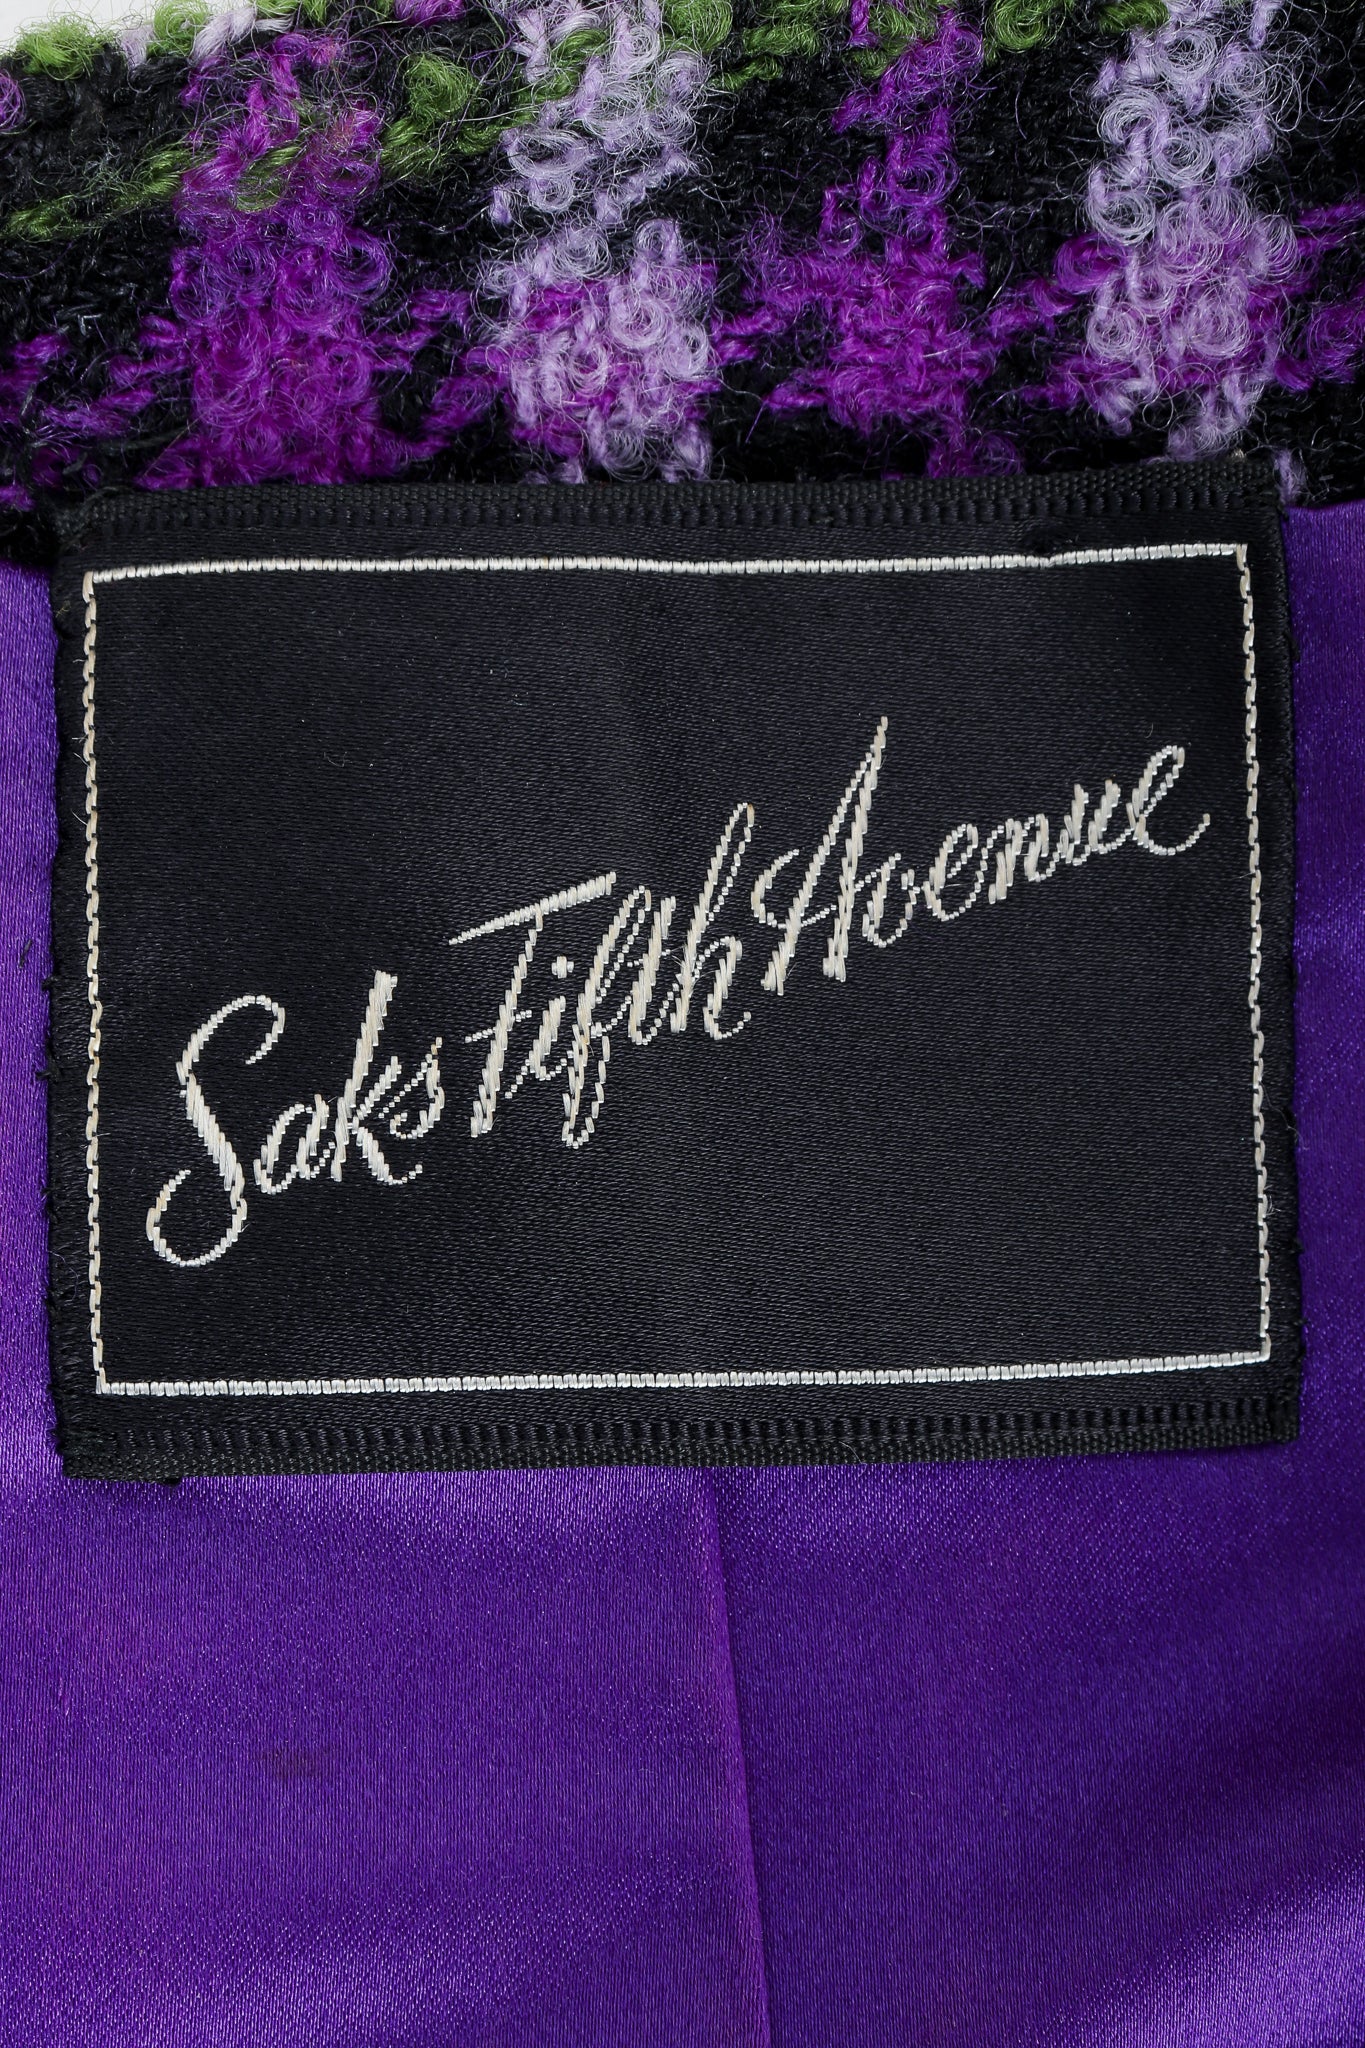 Recess Vintage Saks Fifth Ave label on purple plaid fabric